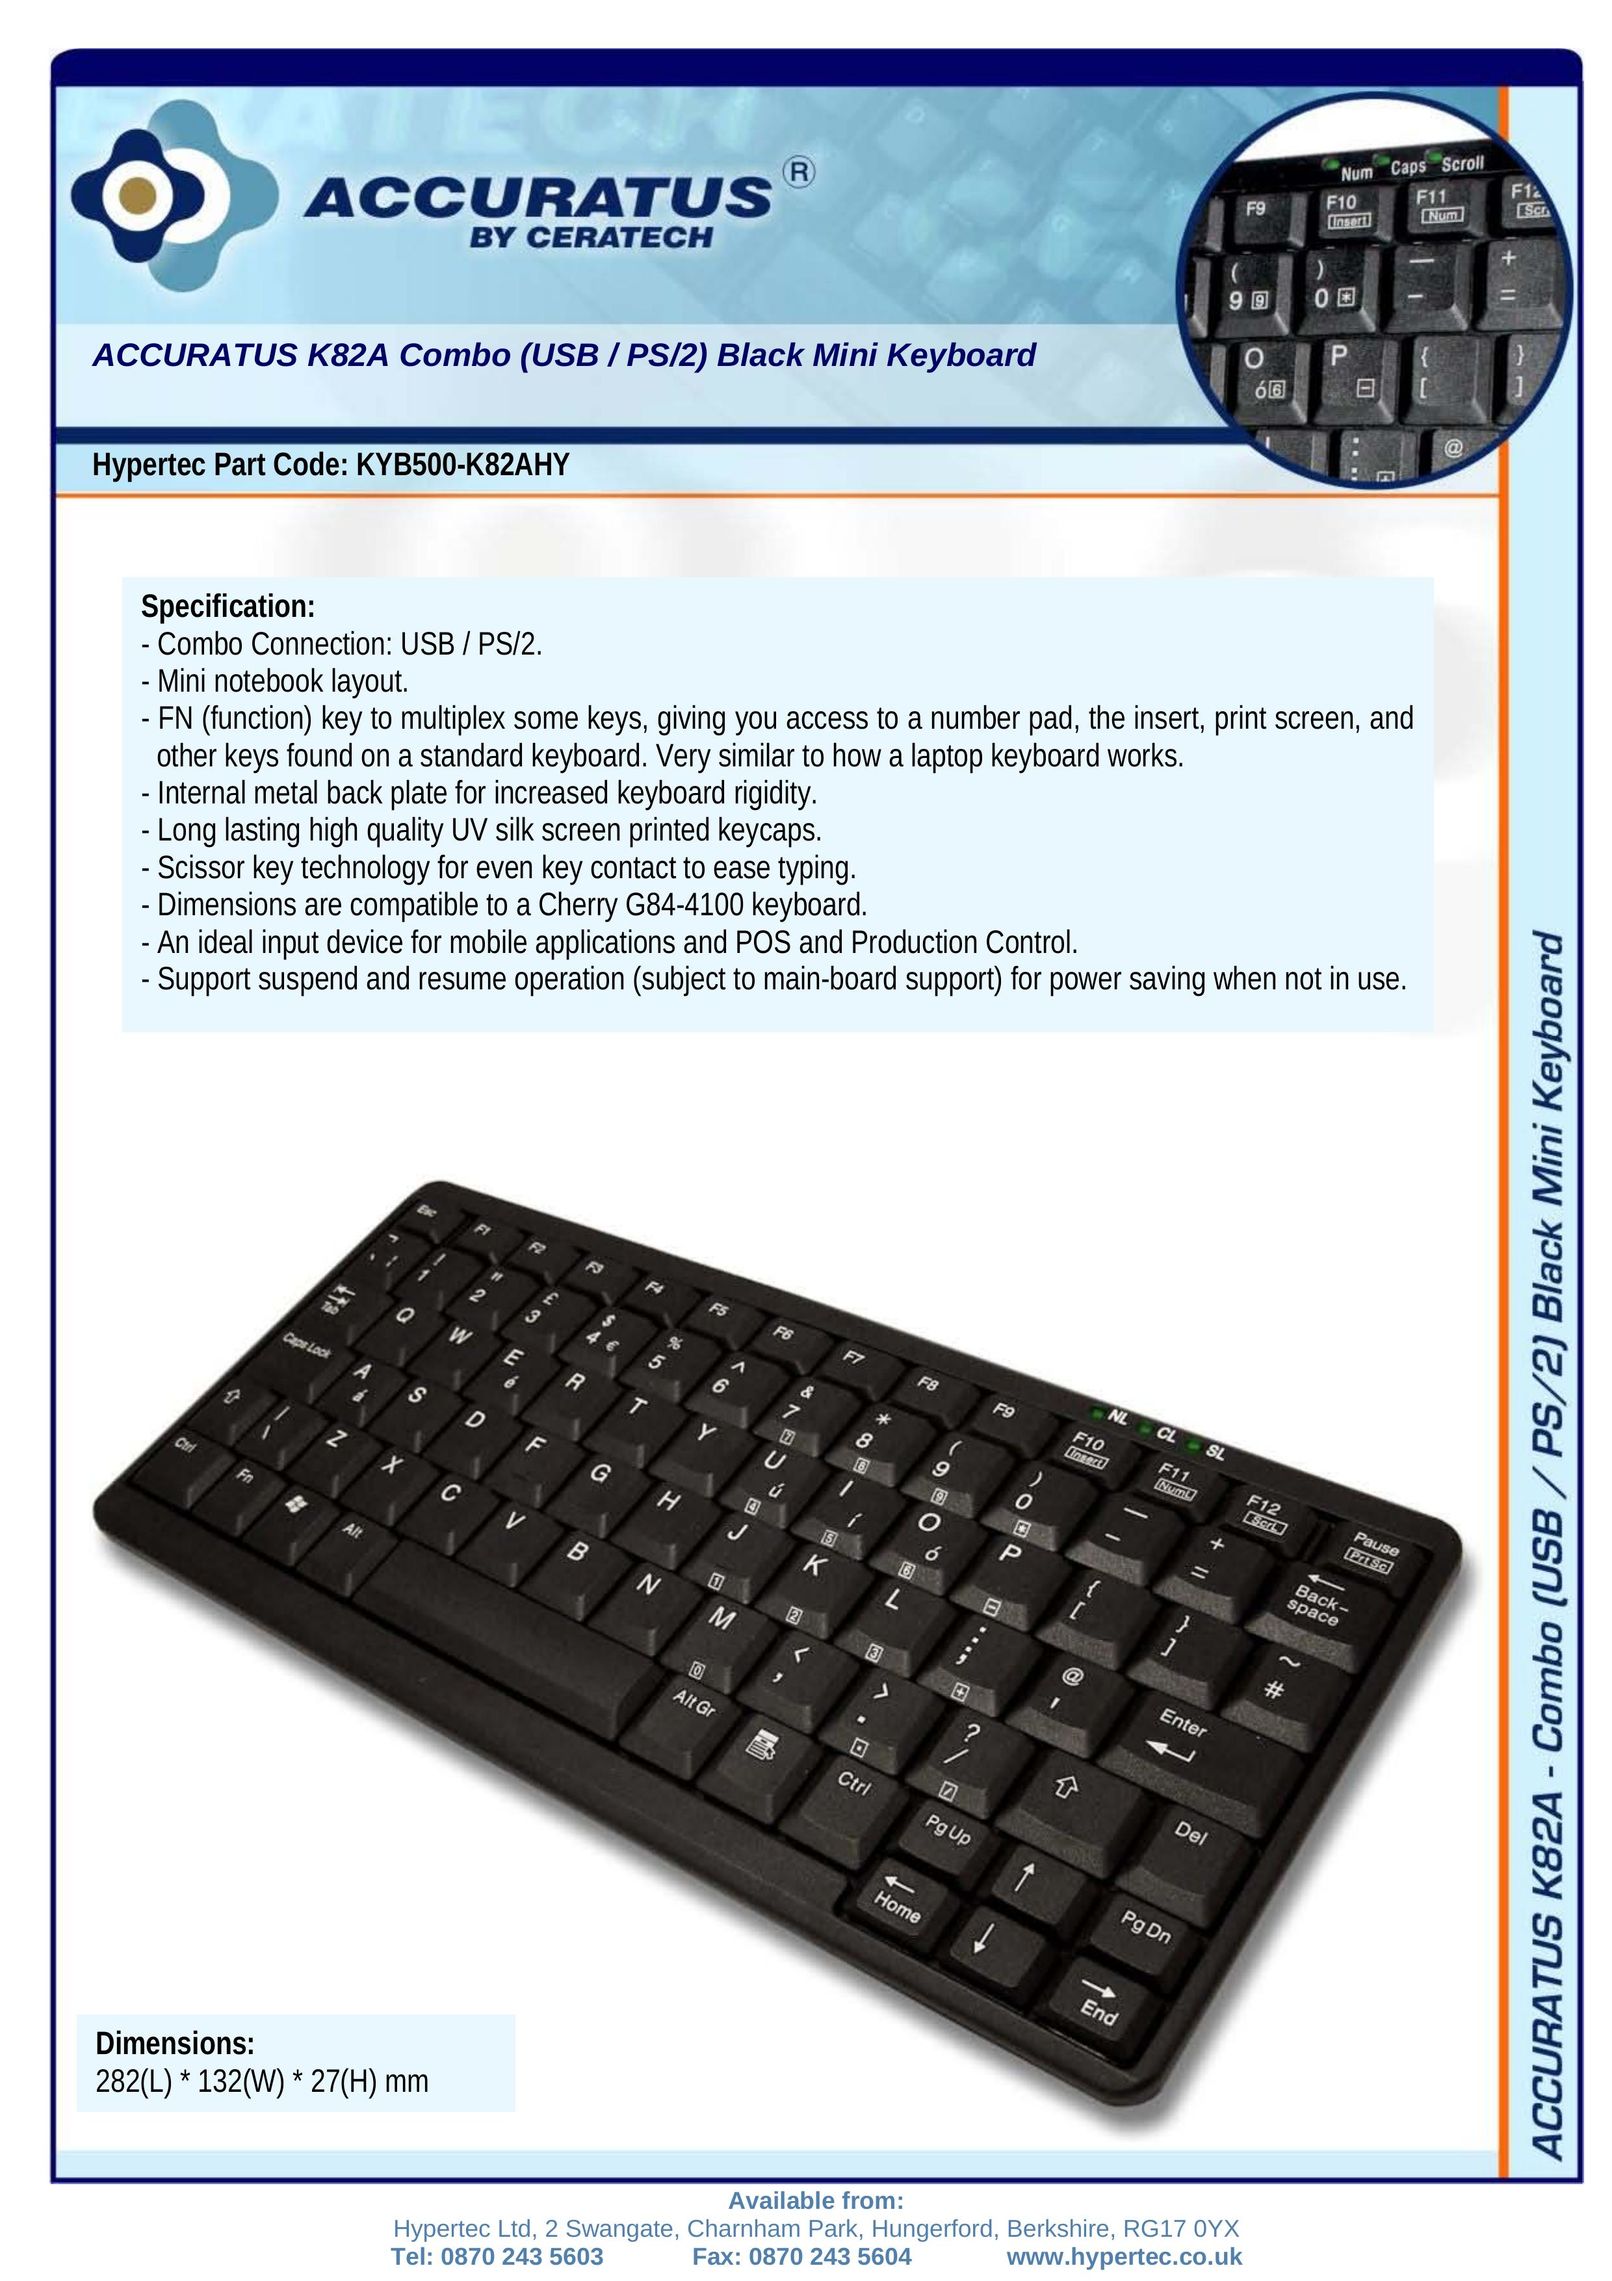 Hypertec KYB500-K82AHY Mouse User Manual